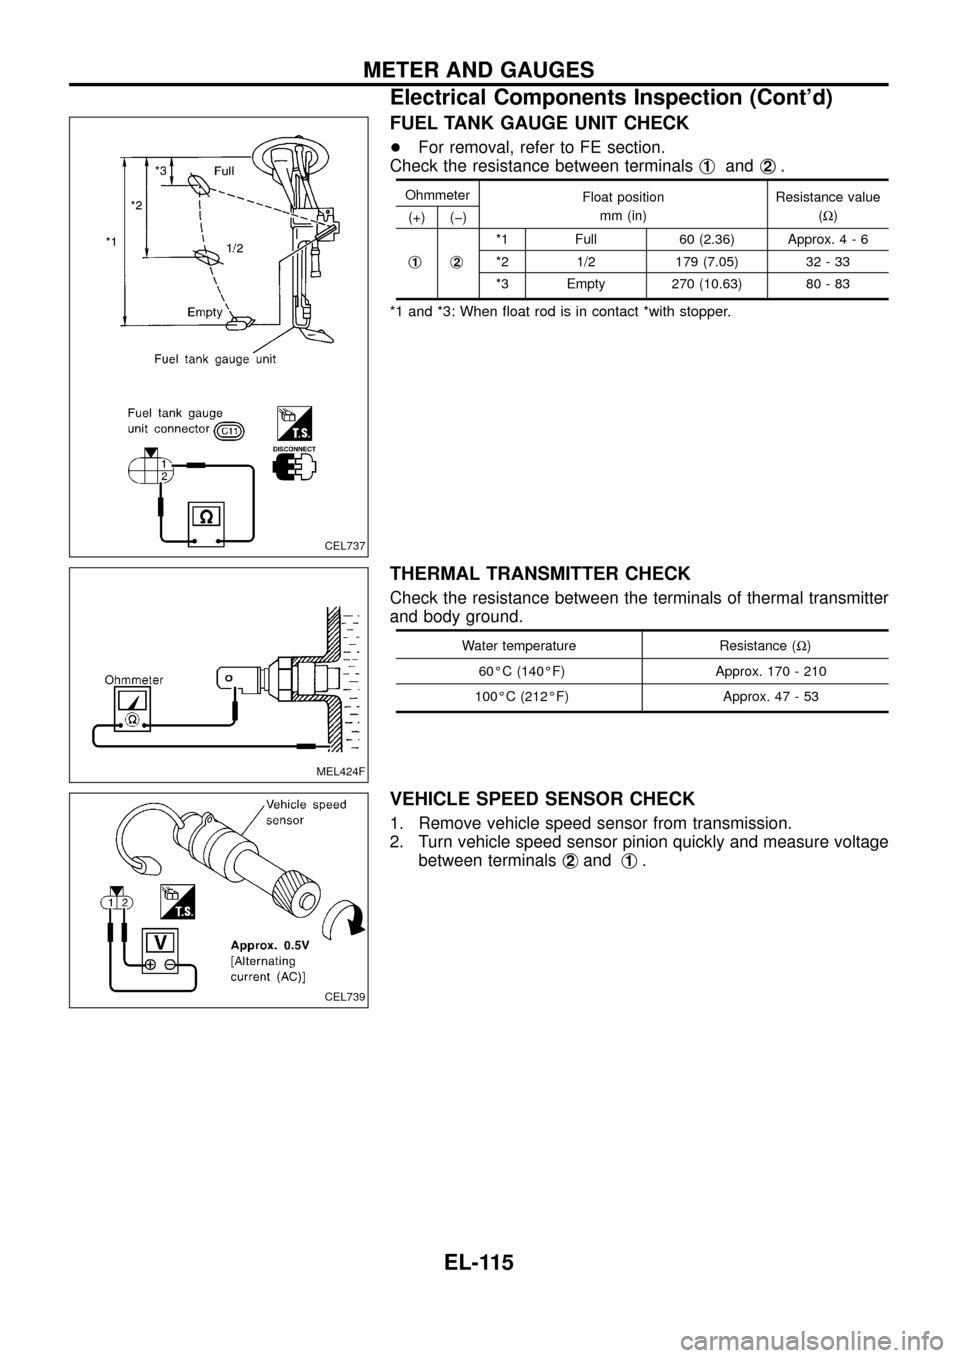 NISSAN PATROL 1998 Y61 / 5.G Electrical System Workshop Manual FUEL TANK GAUGE UNIT CHECK
+For removal, refer to FE section.
Check the resistance between terminalsj
1andj2.
Ohmmeter
Float position
mm (in)Resistance value
(W)
(+) (þ)
j
1j2
*1 Full 60 (2.36) Appro